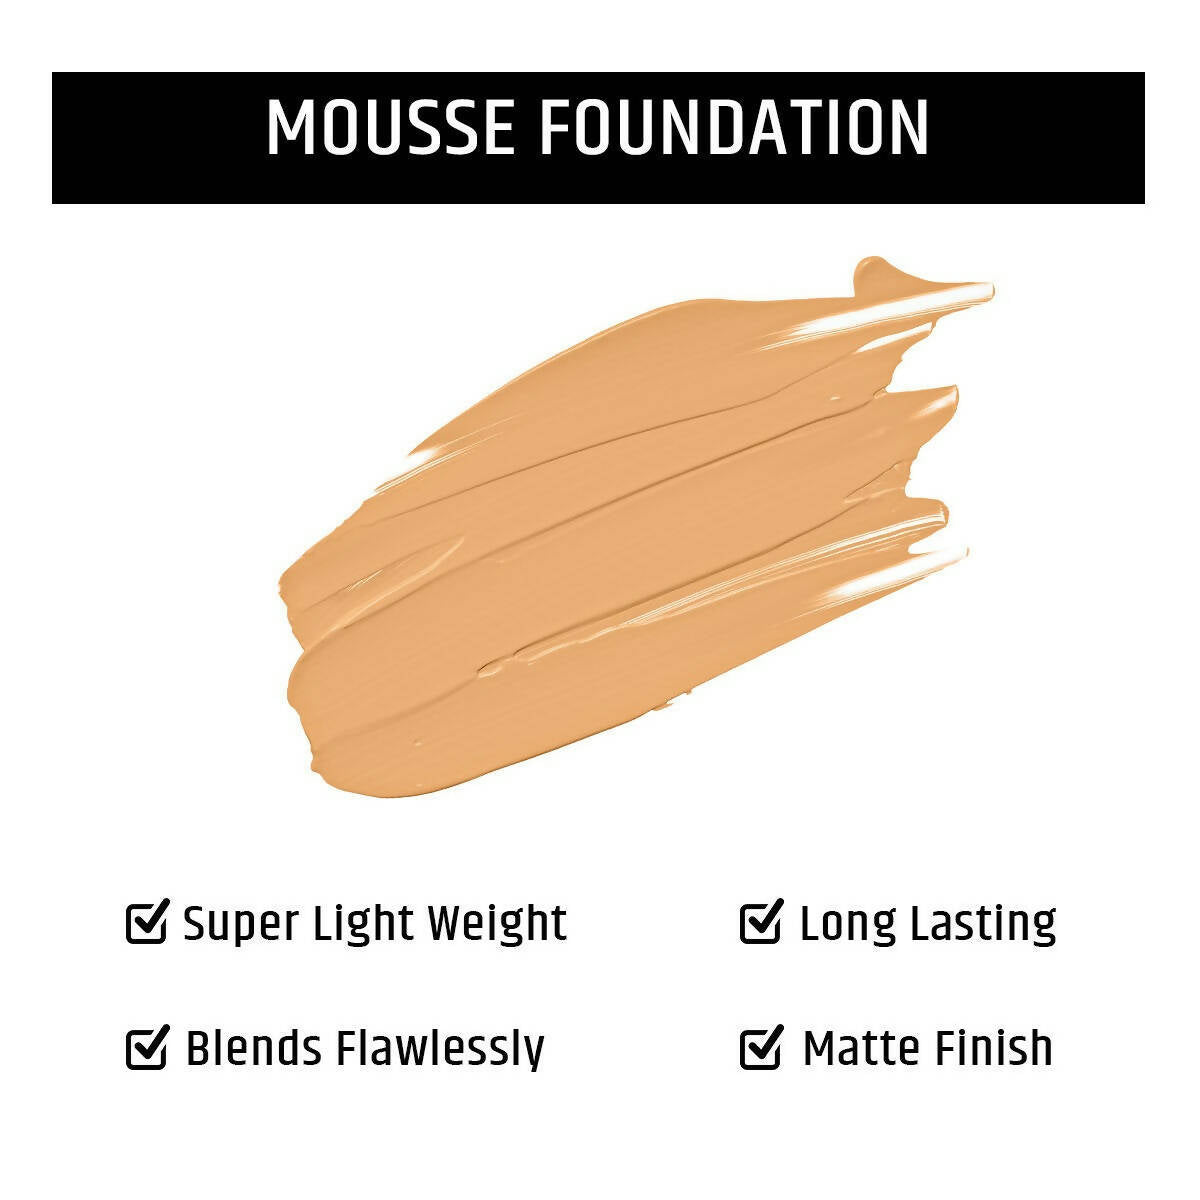 Insight Cosmetics Mousse Foundation - 01 Cream Natural